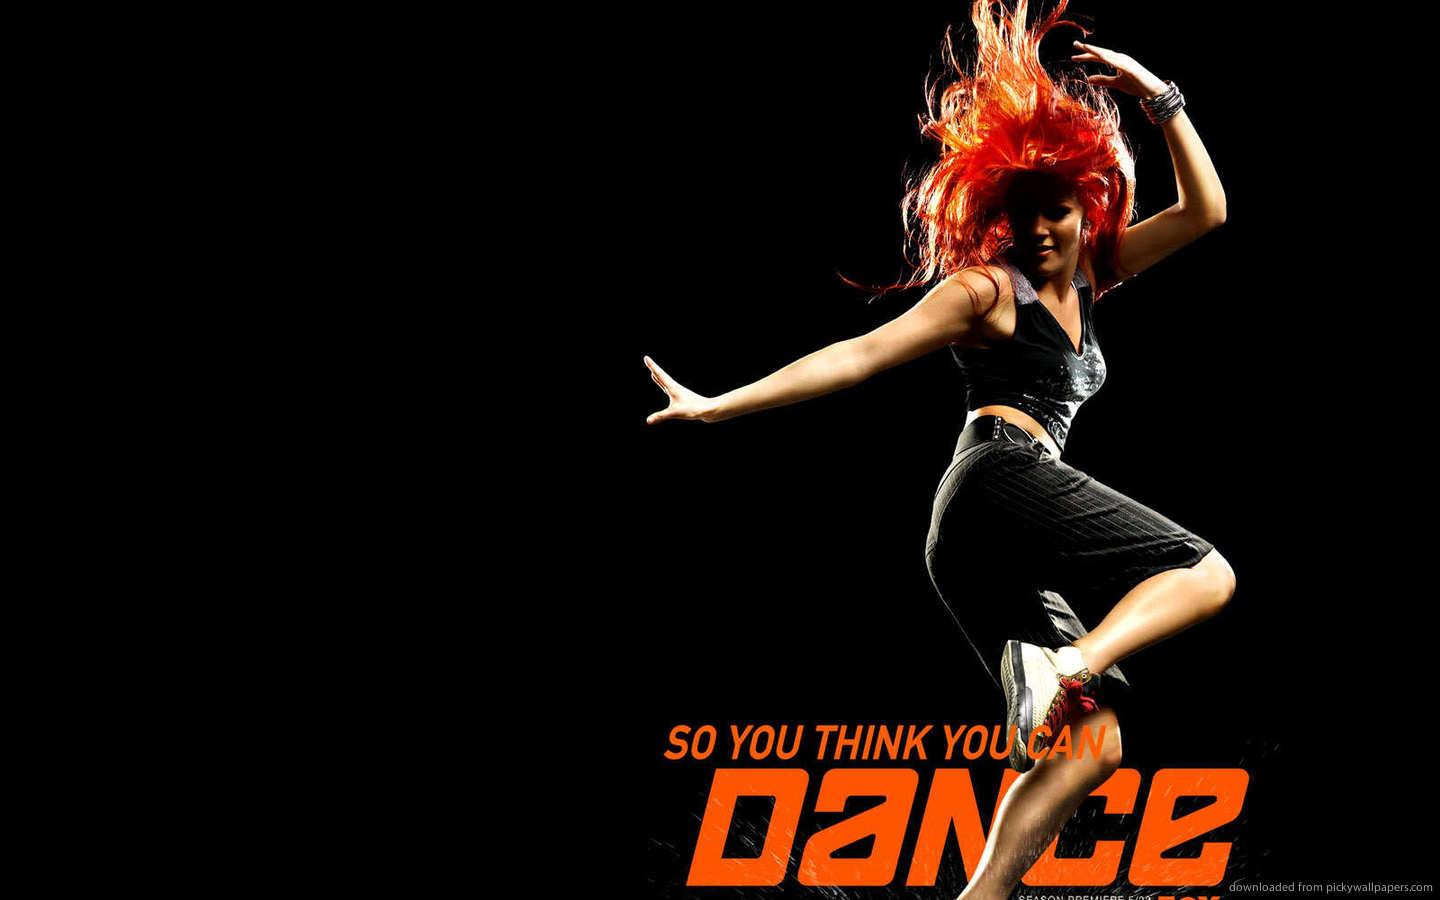 Watch So You Think You Can Dance S04E13 streaming season